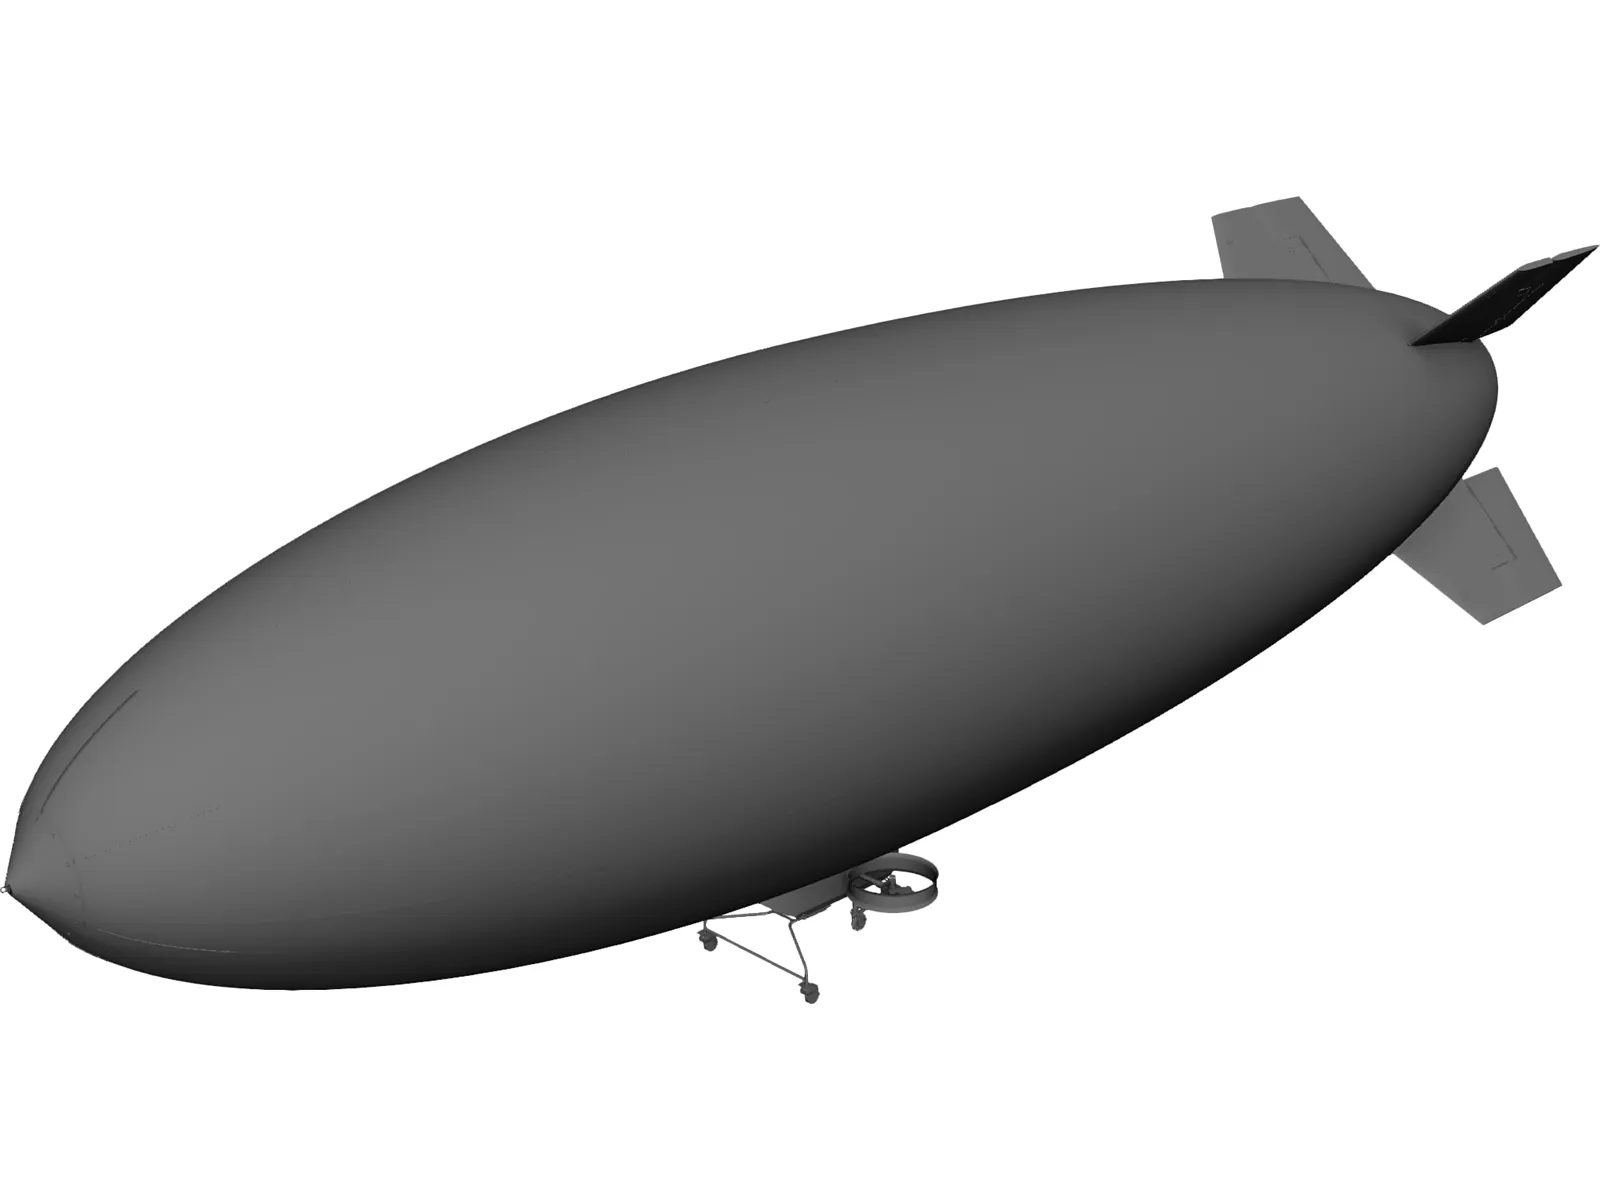 Airship Blimp 3D Model